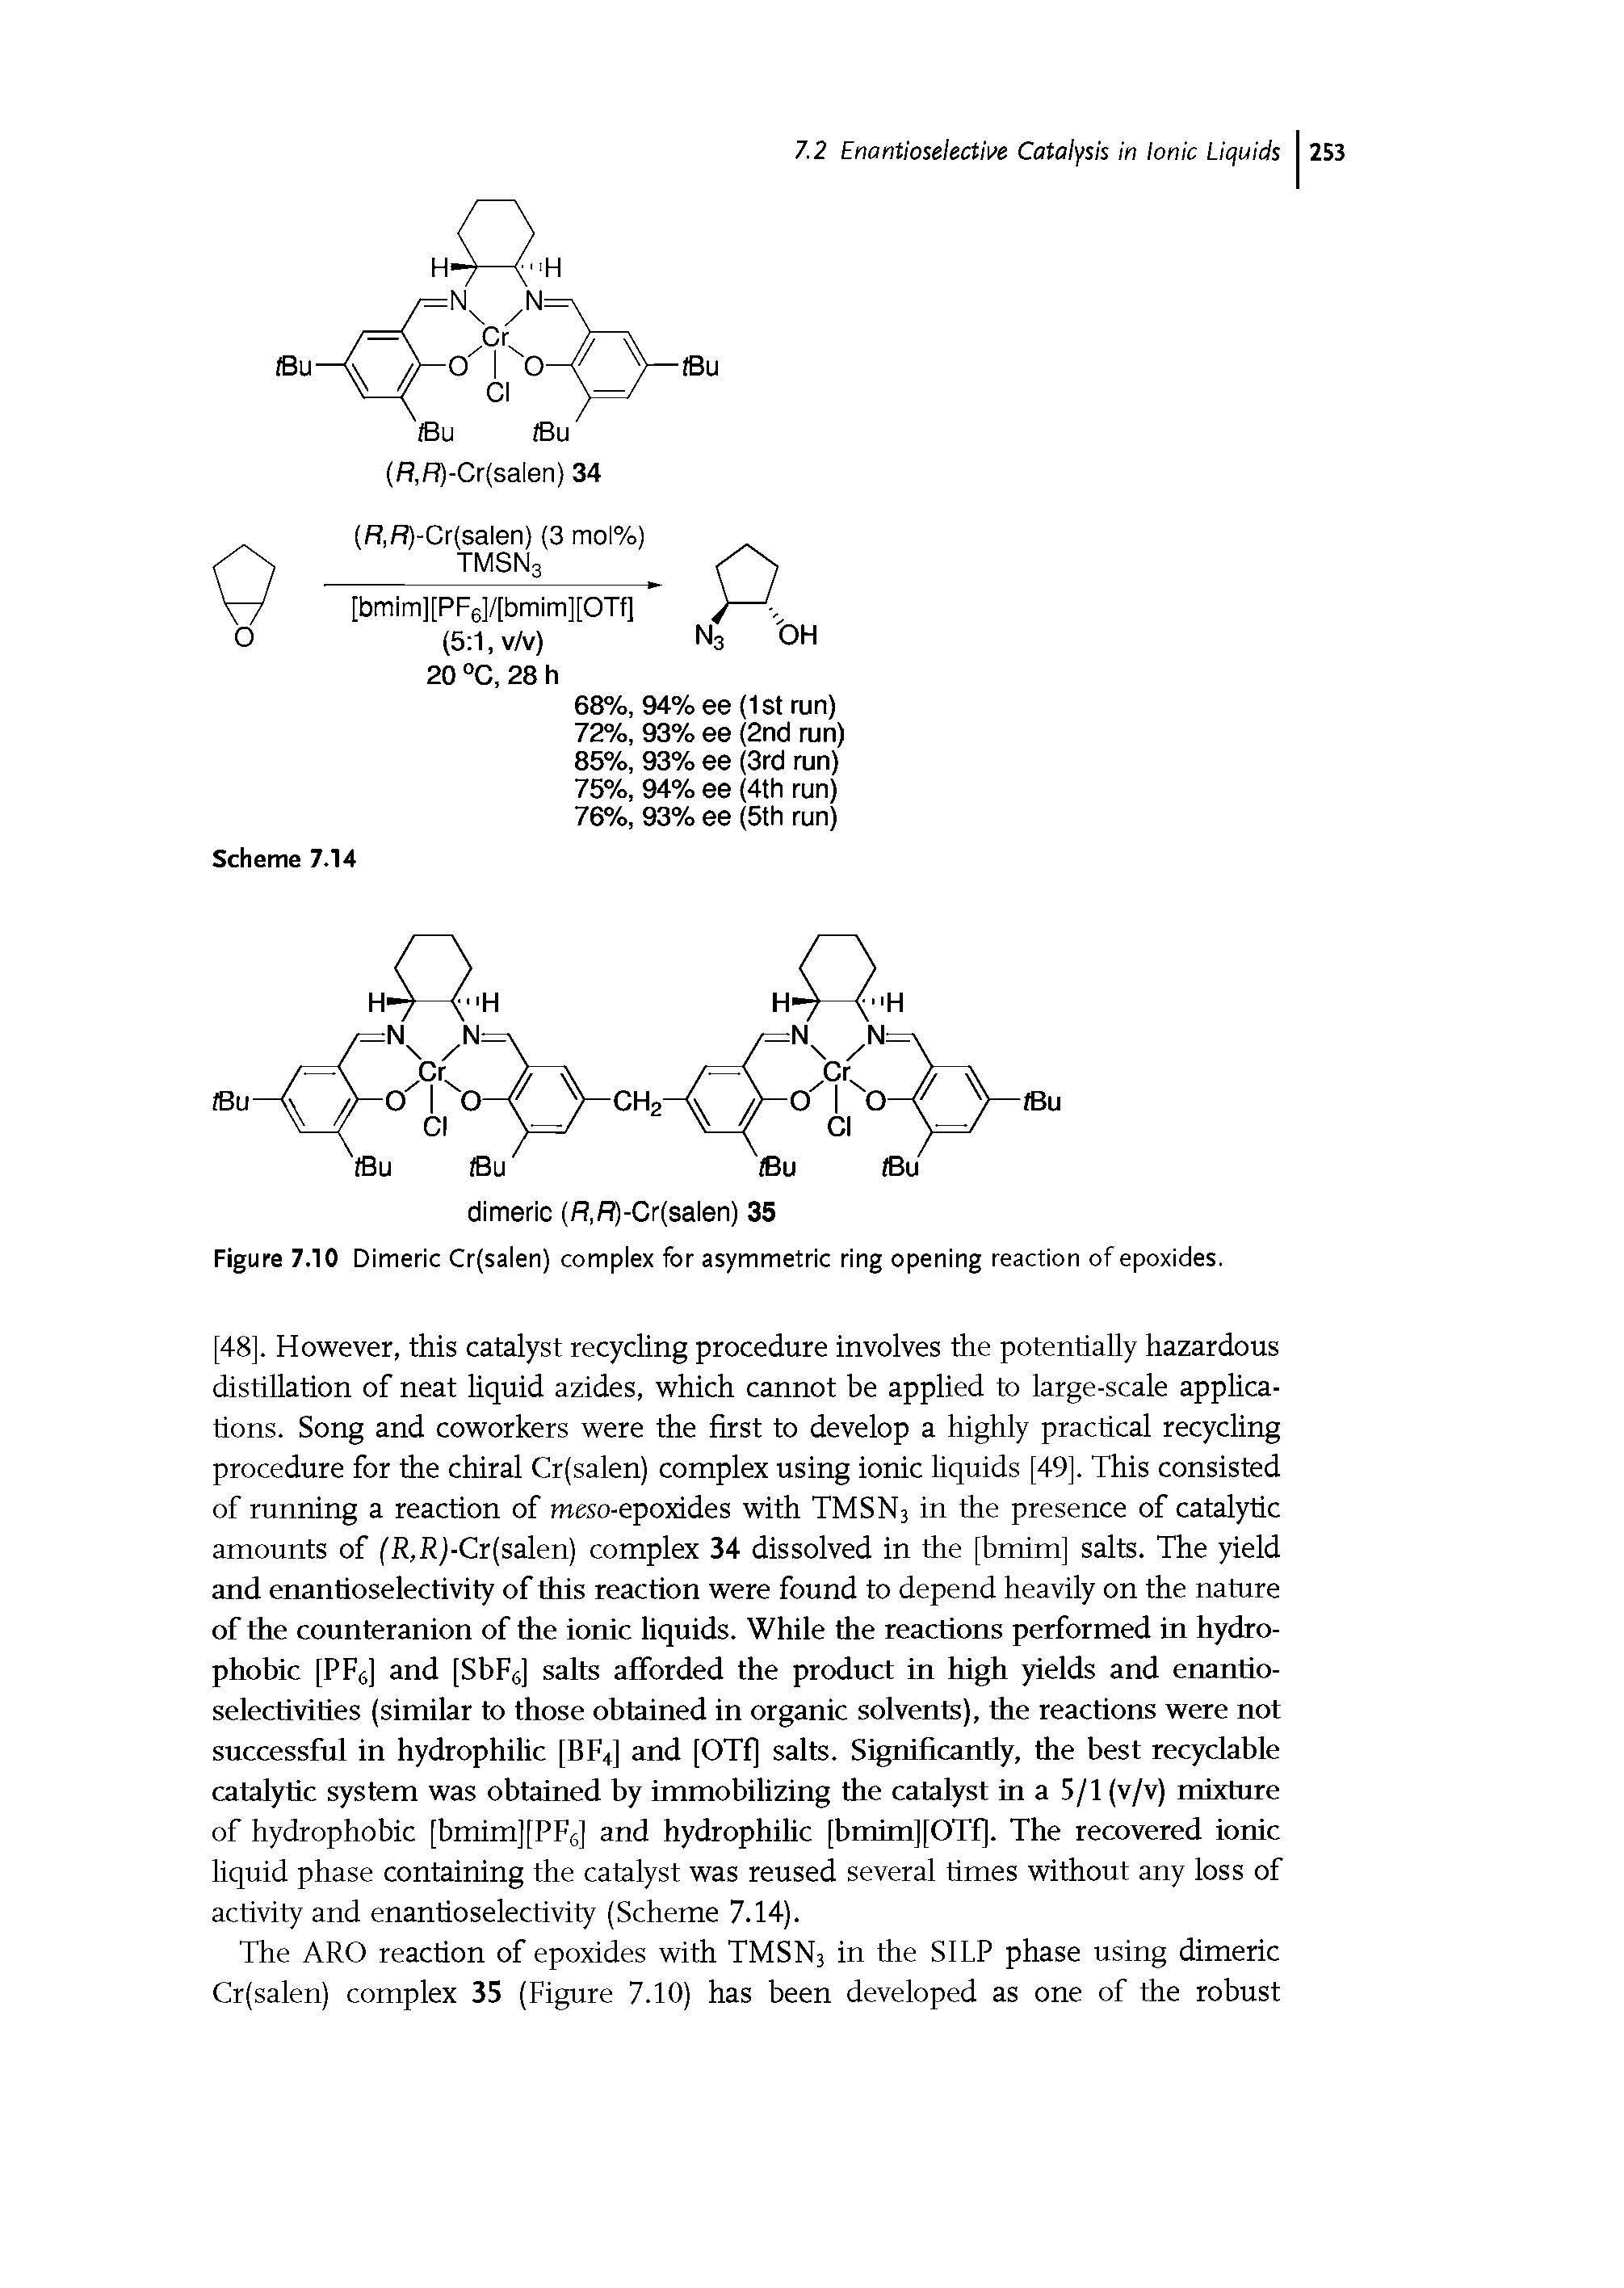 Figure 7.10 Dimeric Cr(saien) compiex for asymmetric ring opening reaction of epoxides.